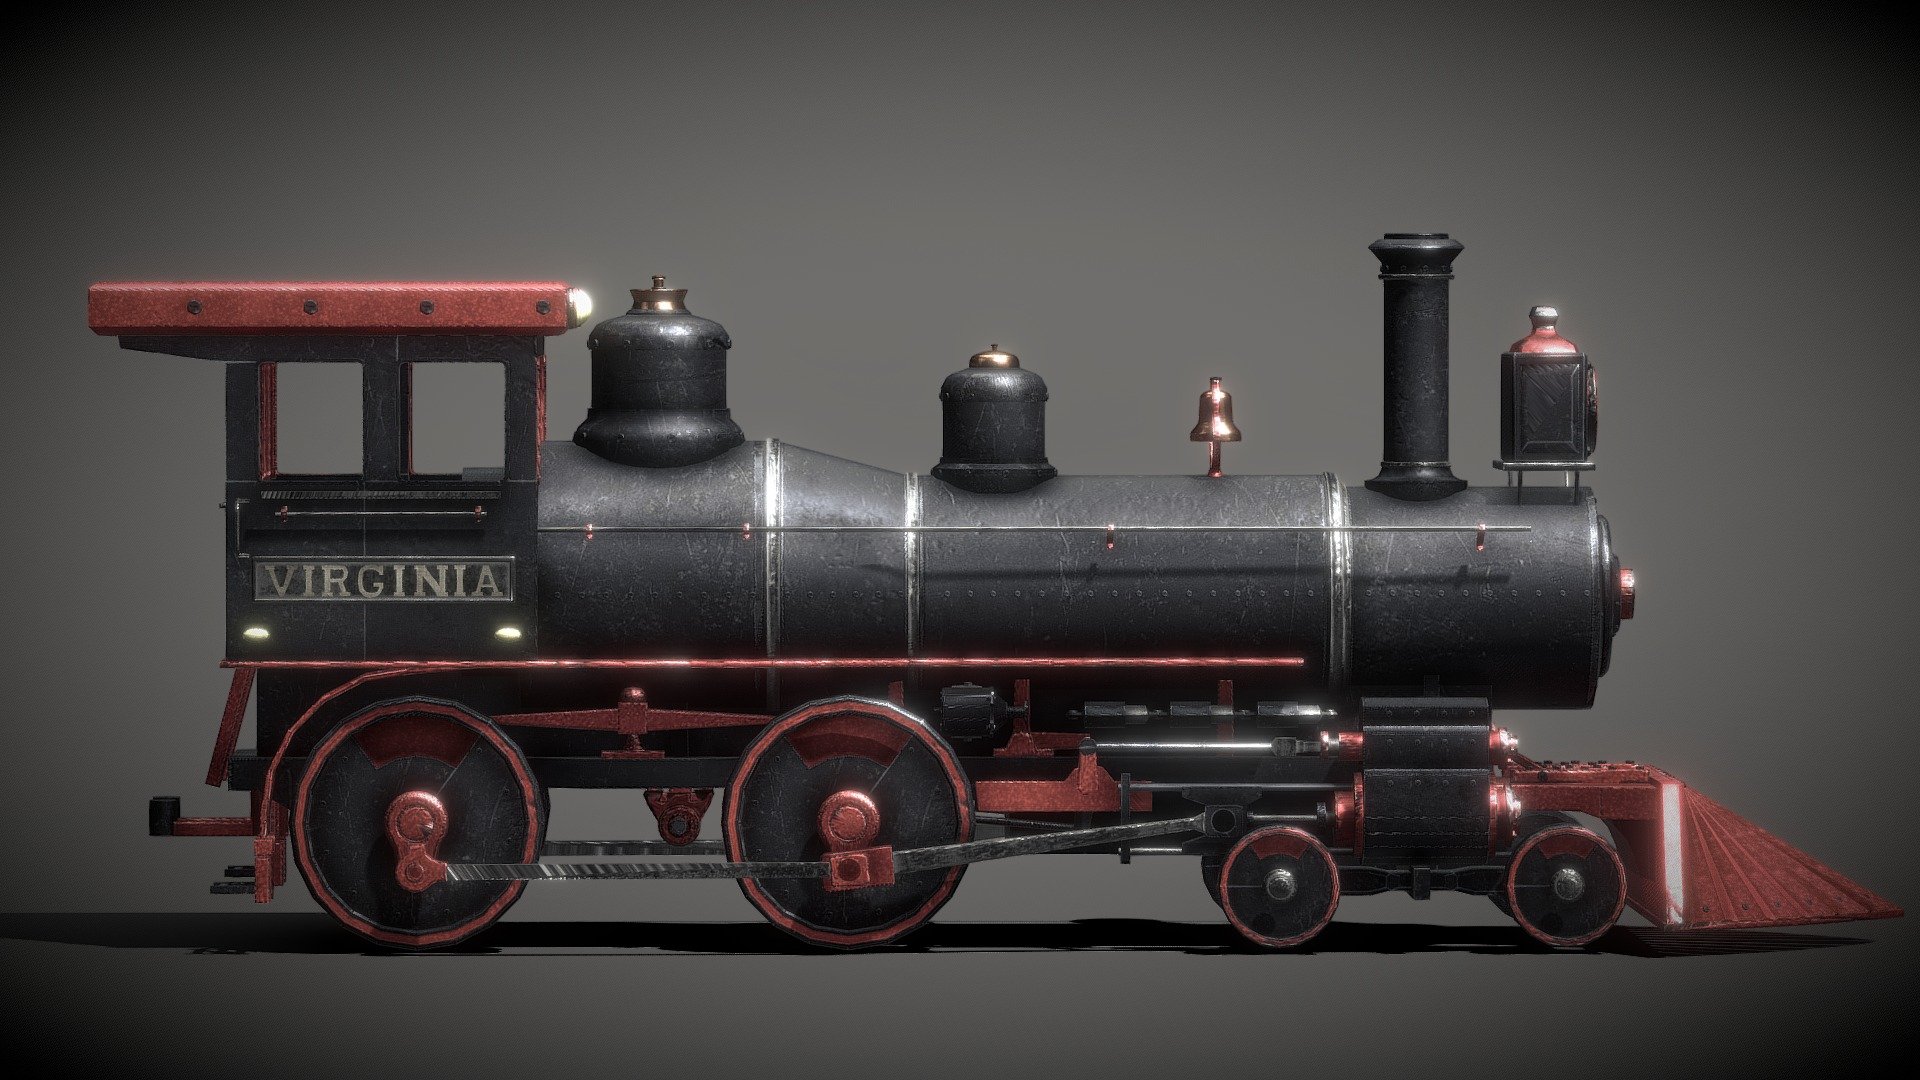 Locomotive "Virginia"